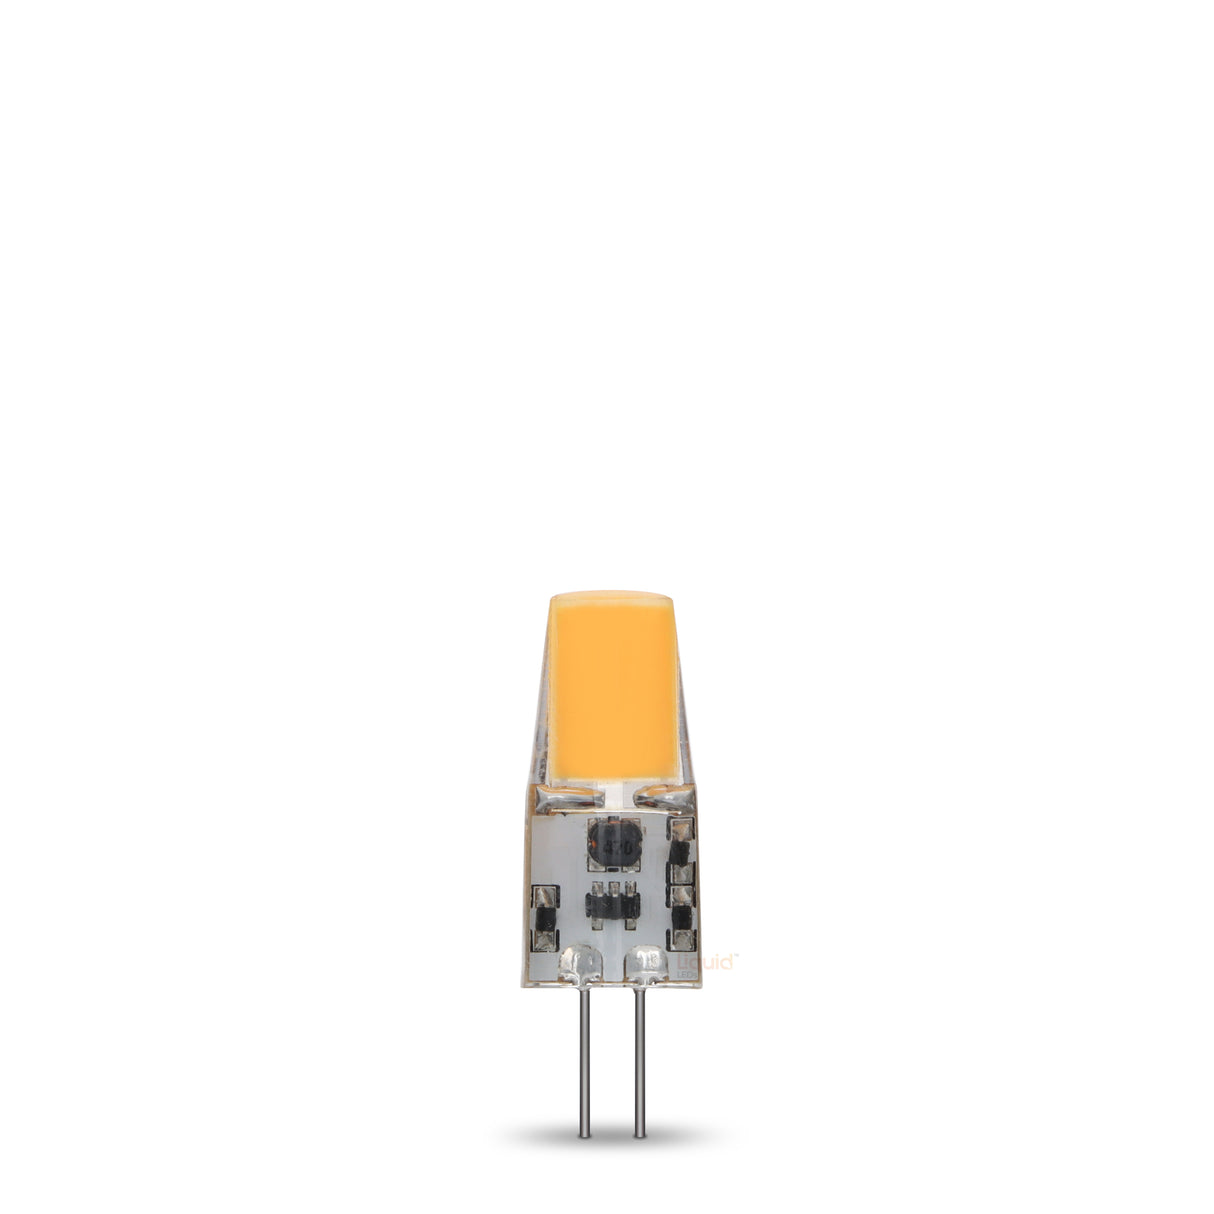 2W G4 12 Volt AC/DC Bi-Pin LED Bulb